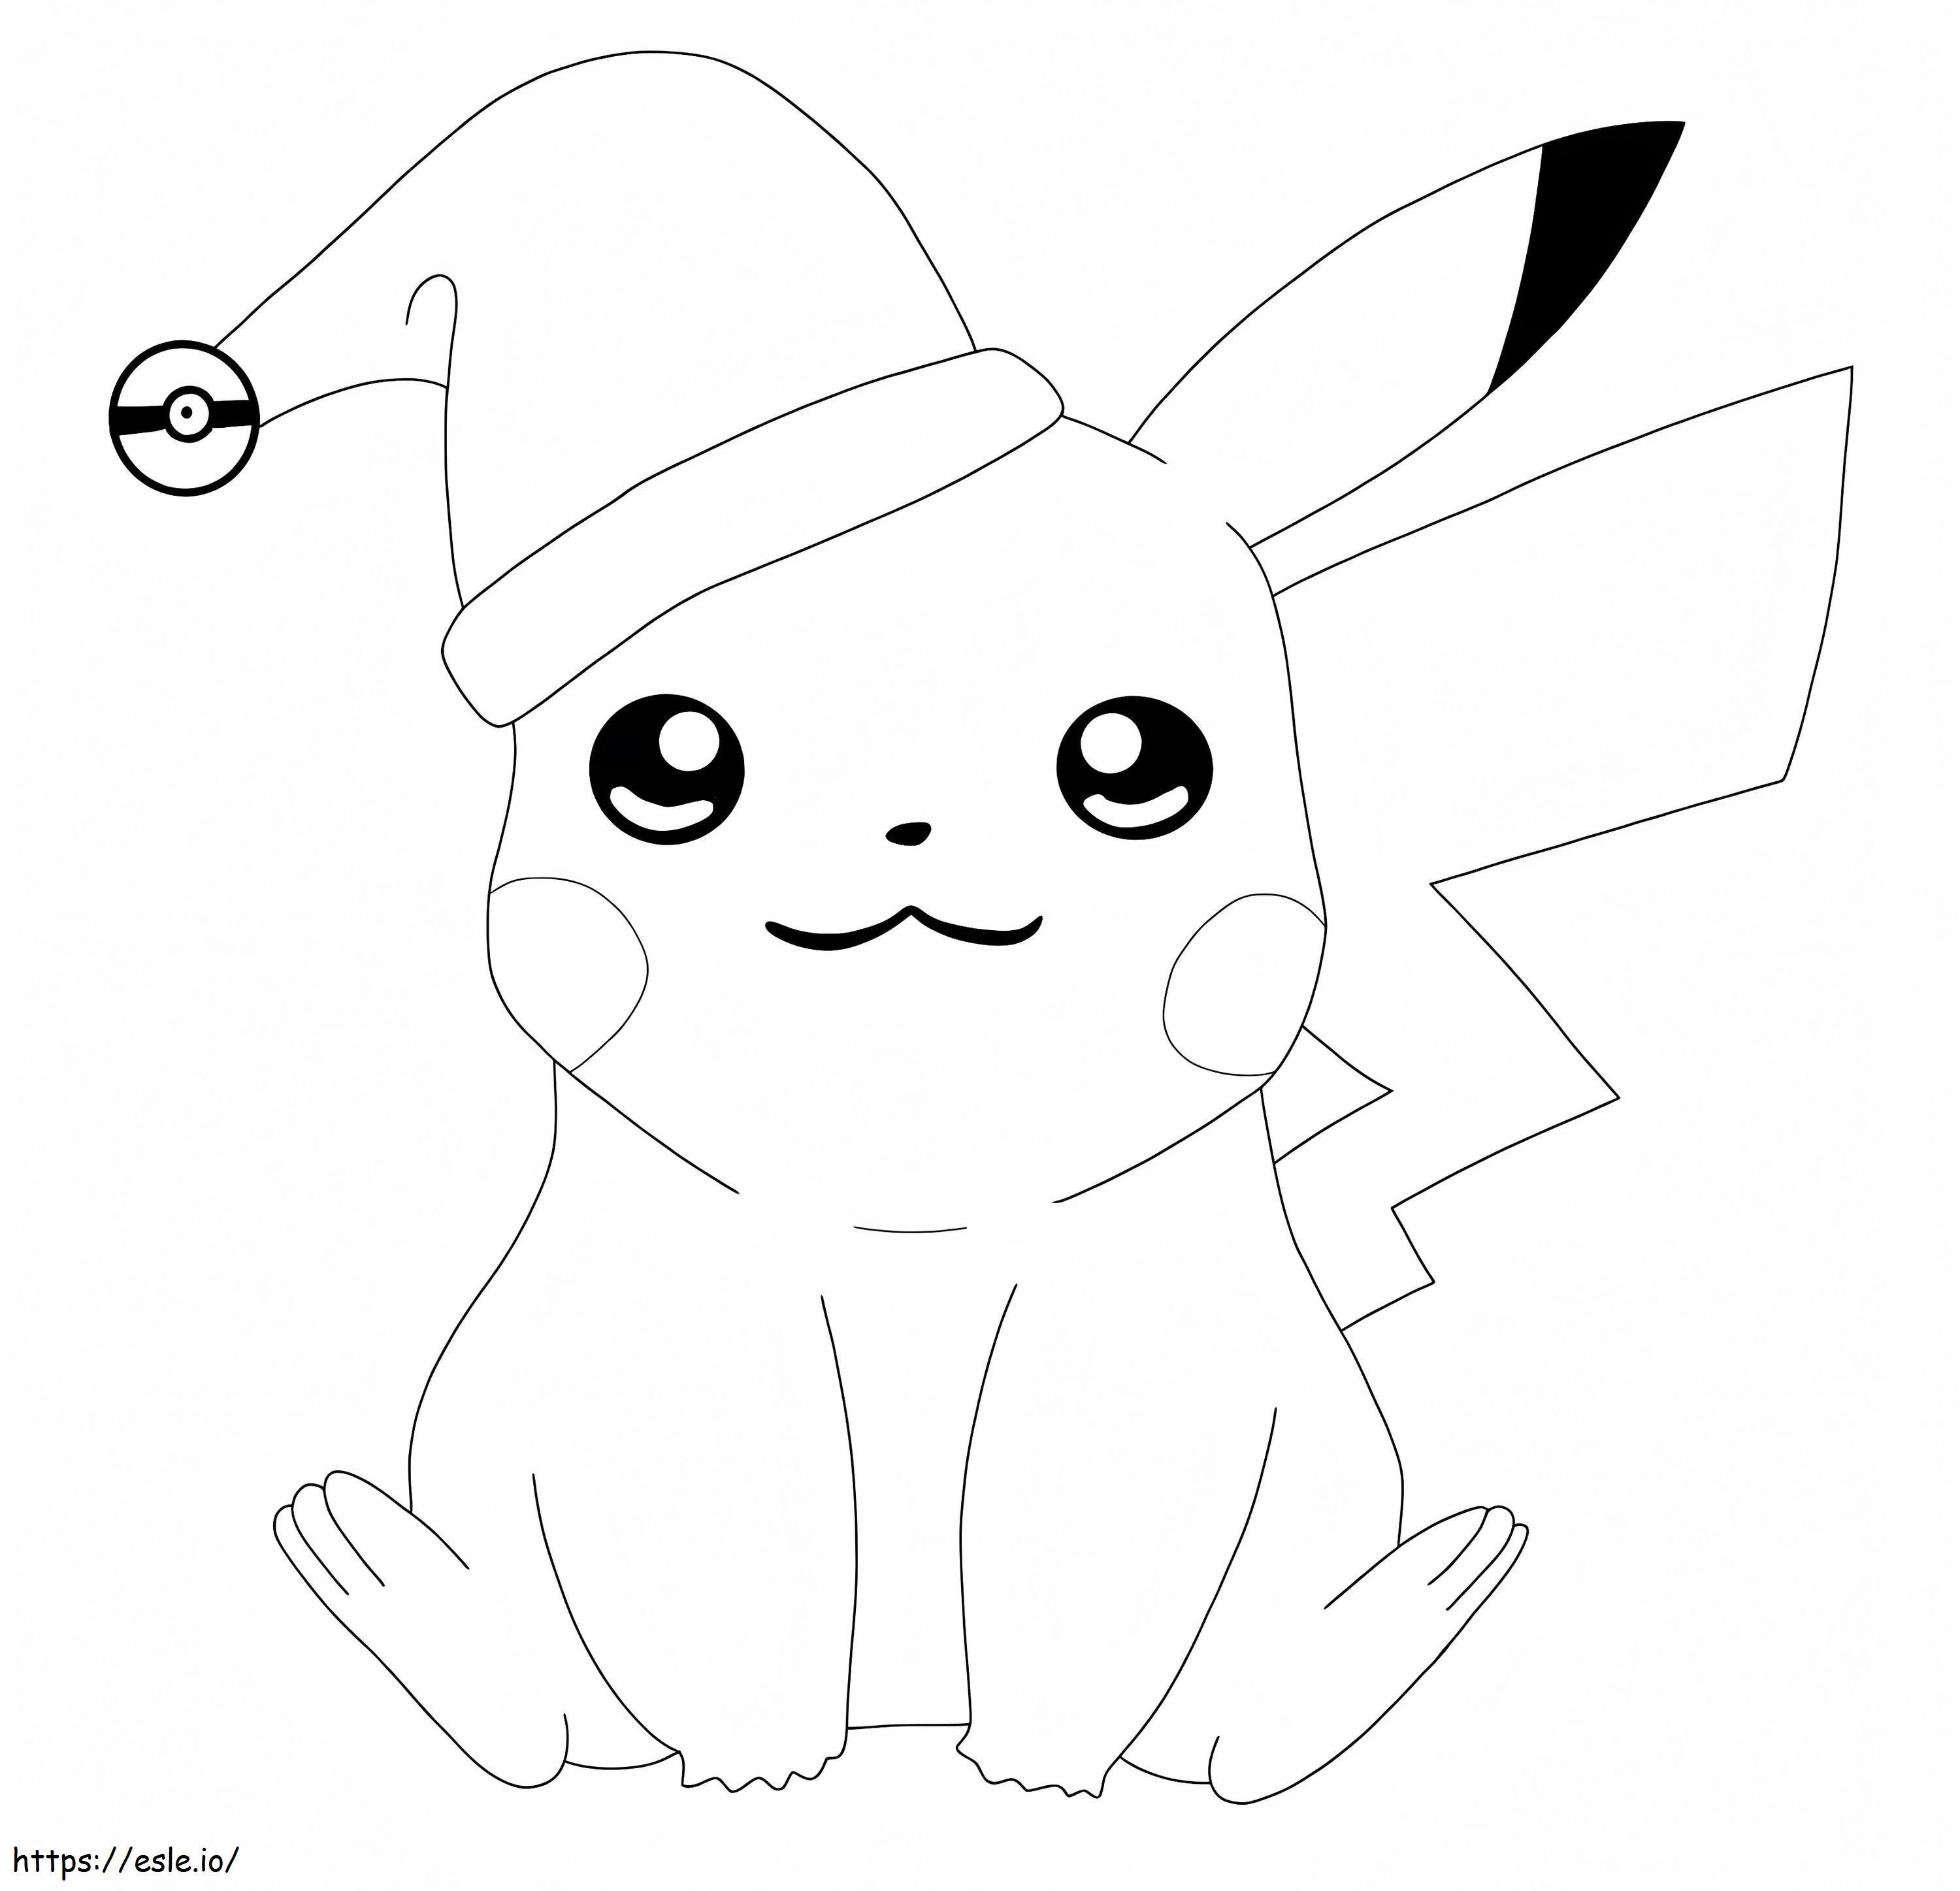 Pikachu com chapéu de Papai Noel para colorir